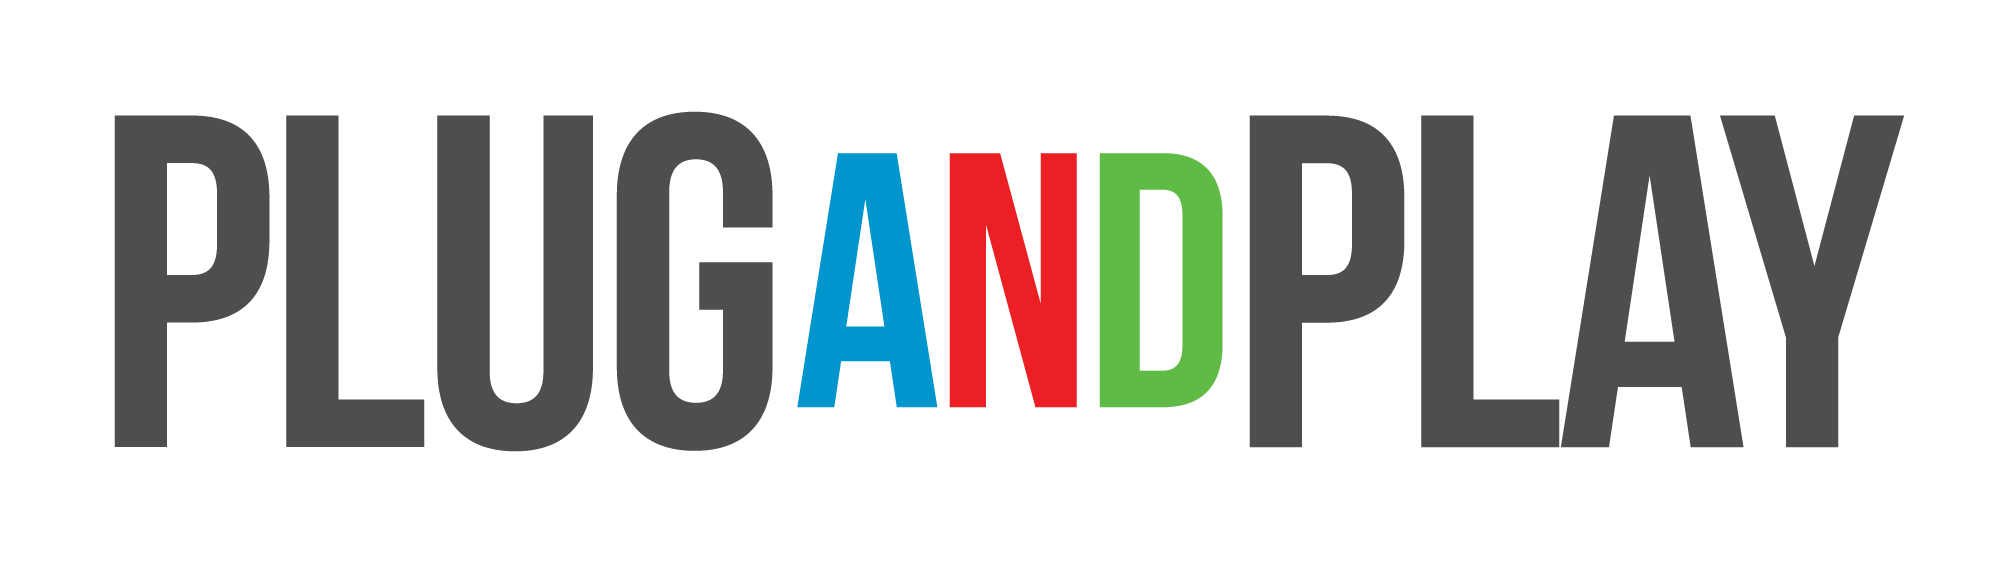 PNP-main-no-slogan-logo-color (1).png